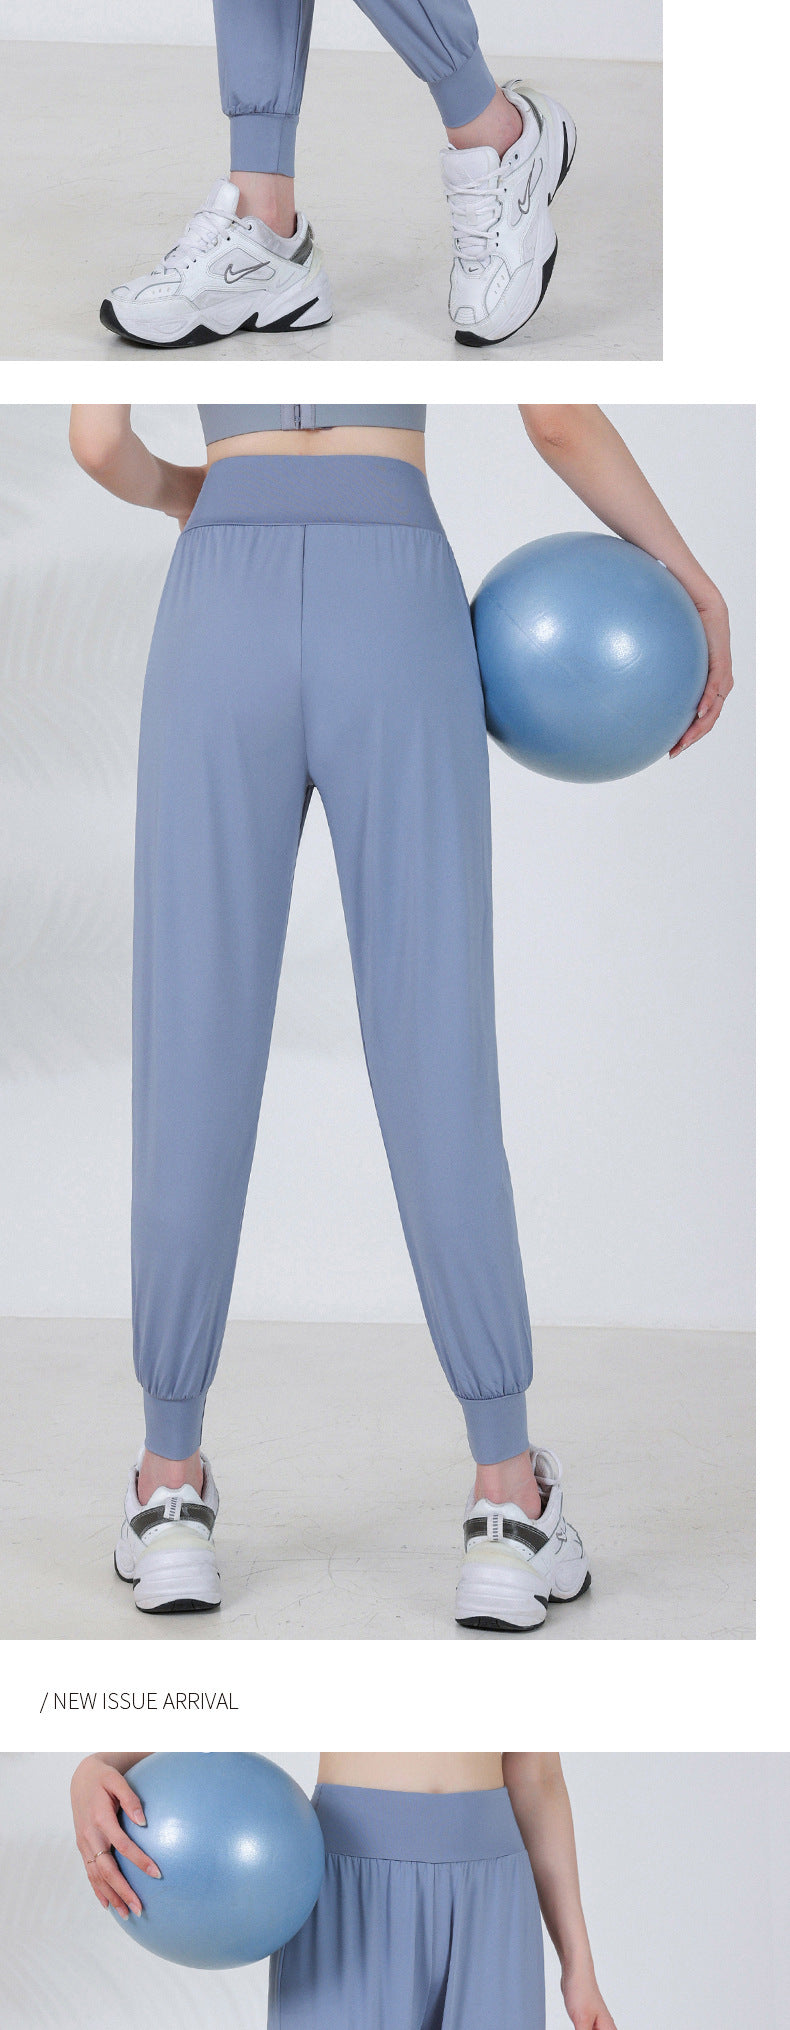 sports pants women's loose trousers quick-drying running fitness yoga pants thin section luminous harem pants